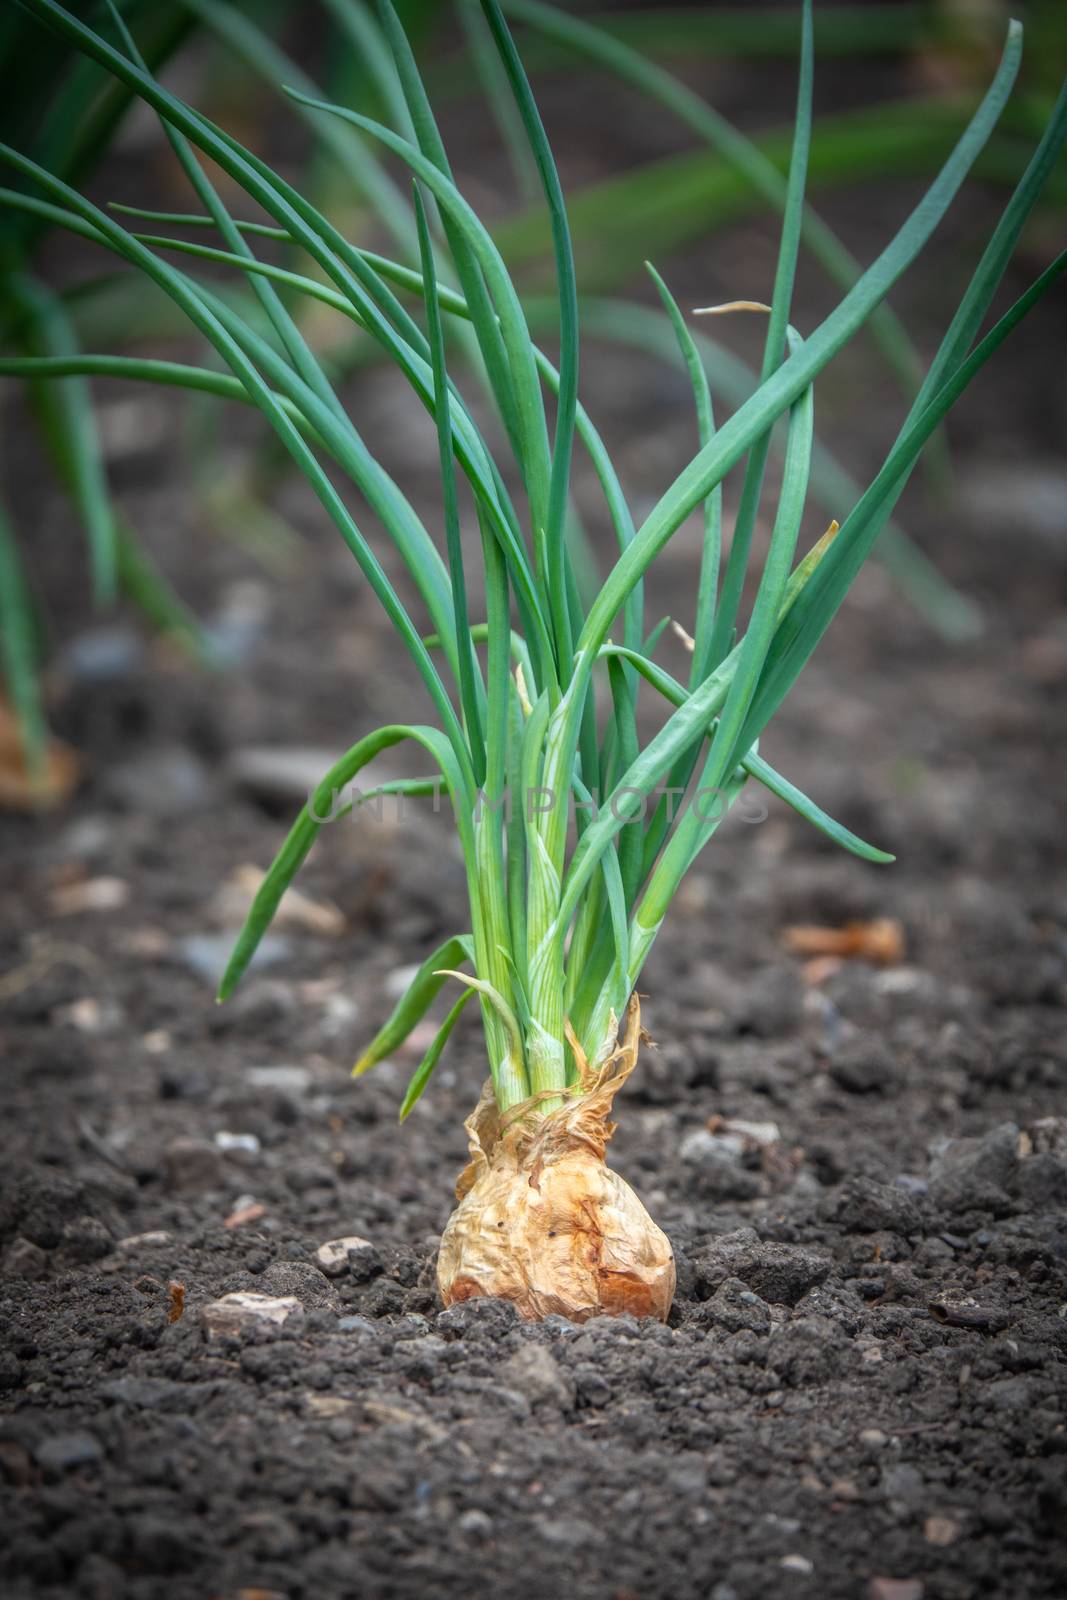 Shallot Onion Growing by mrdoomits